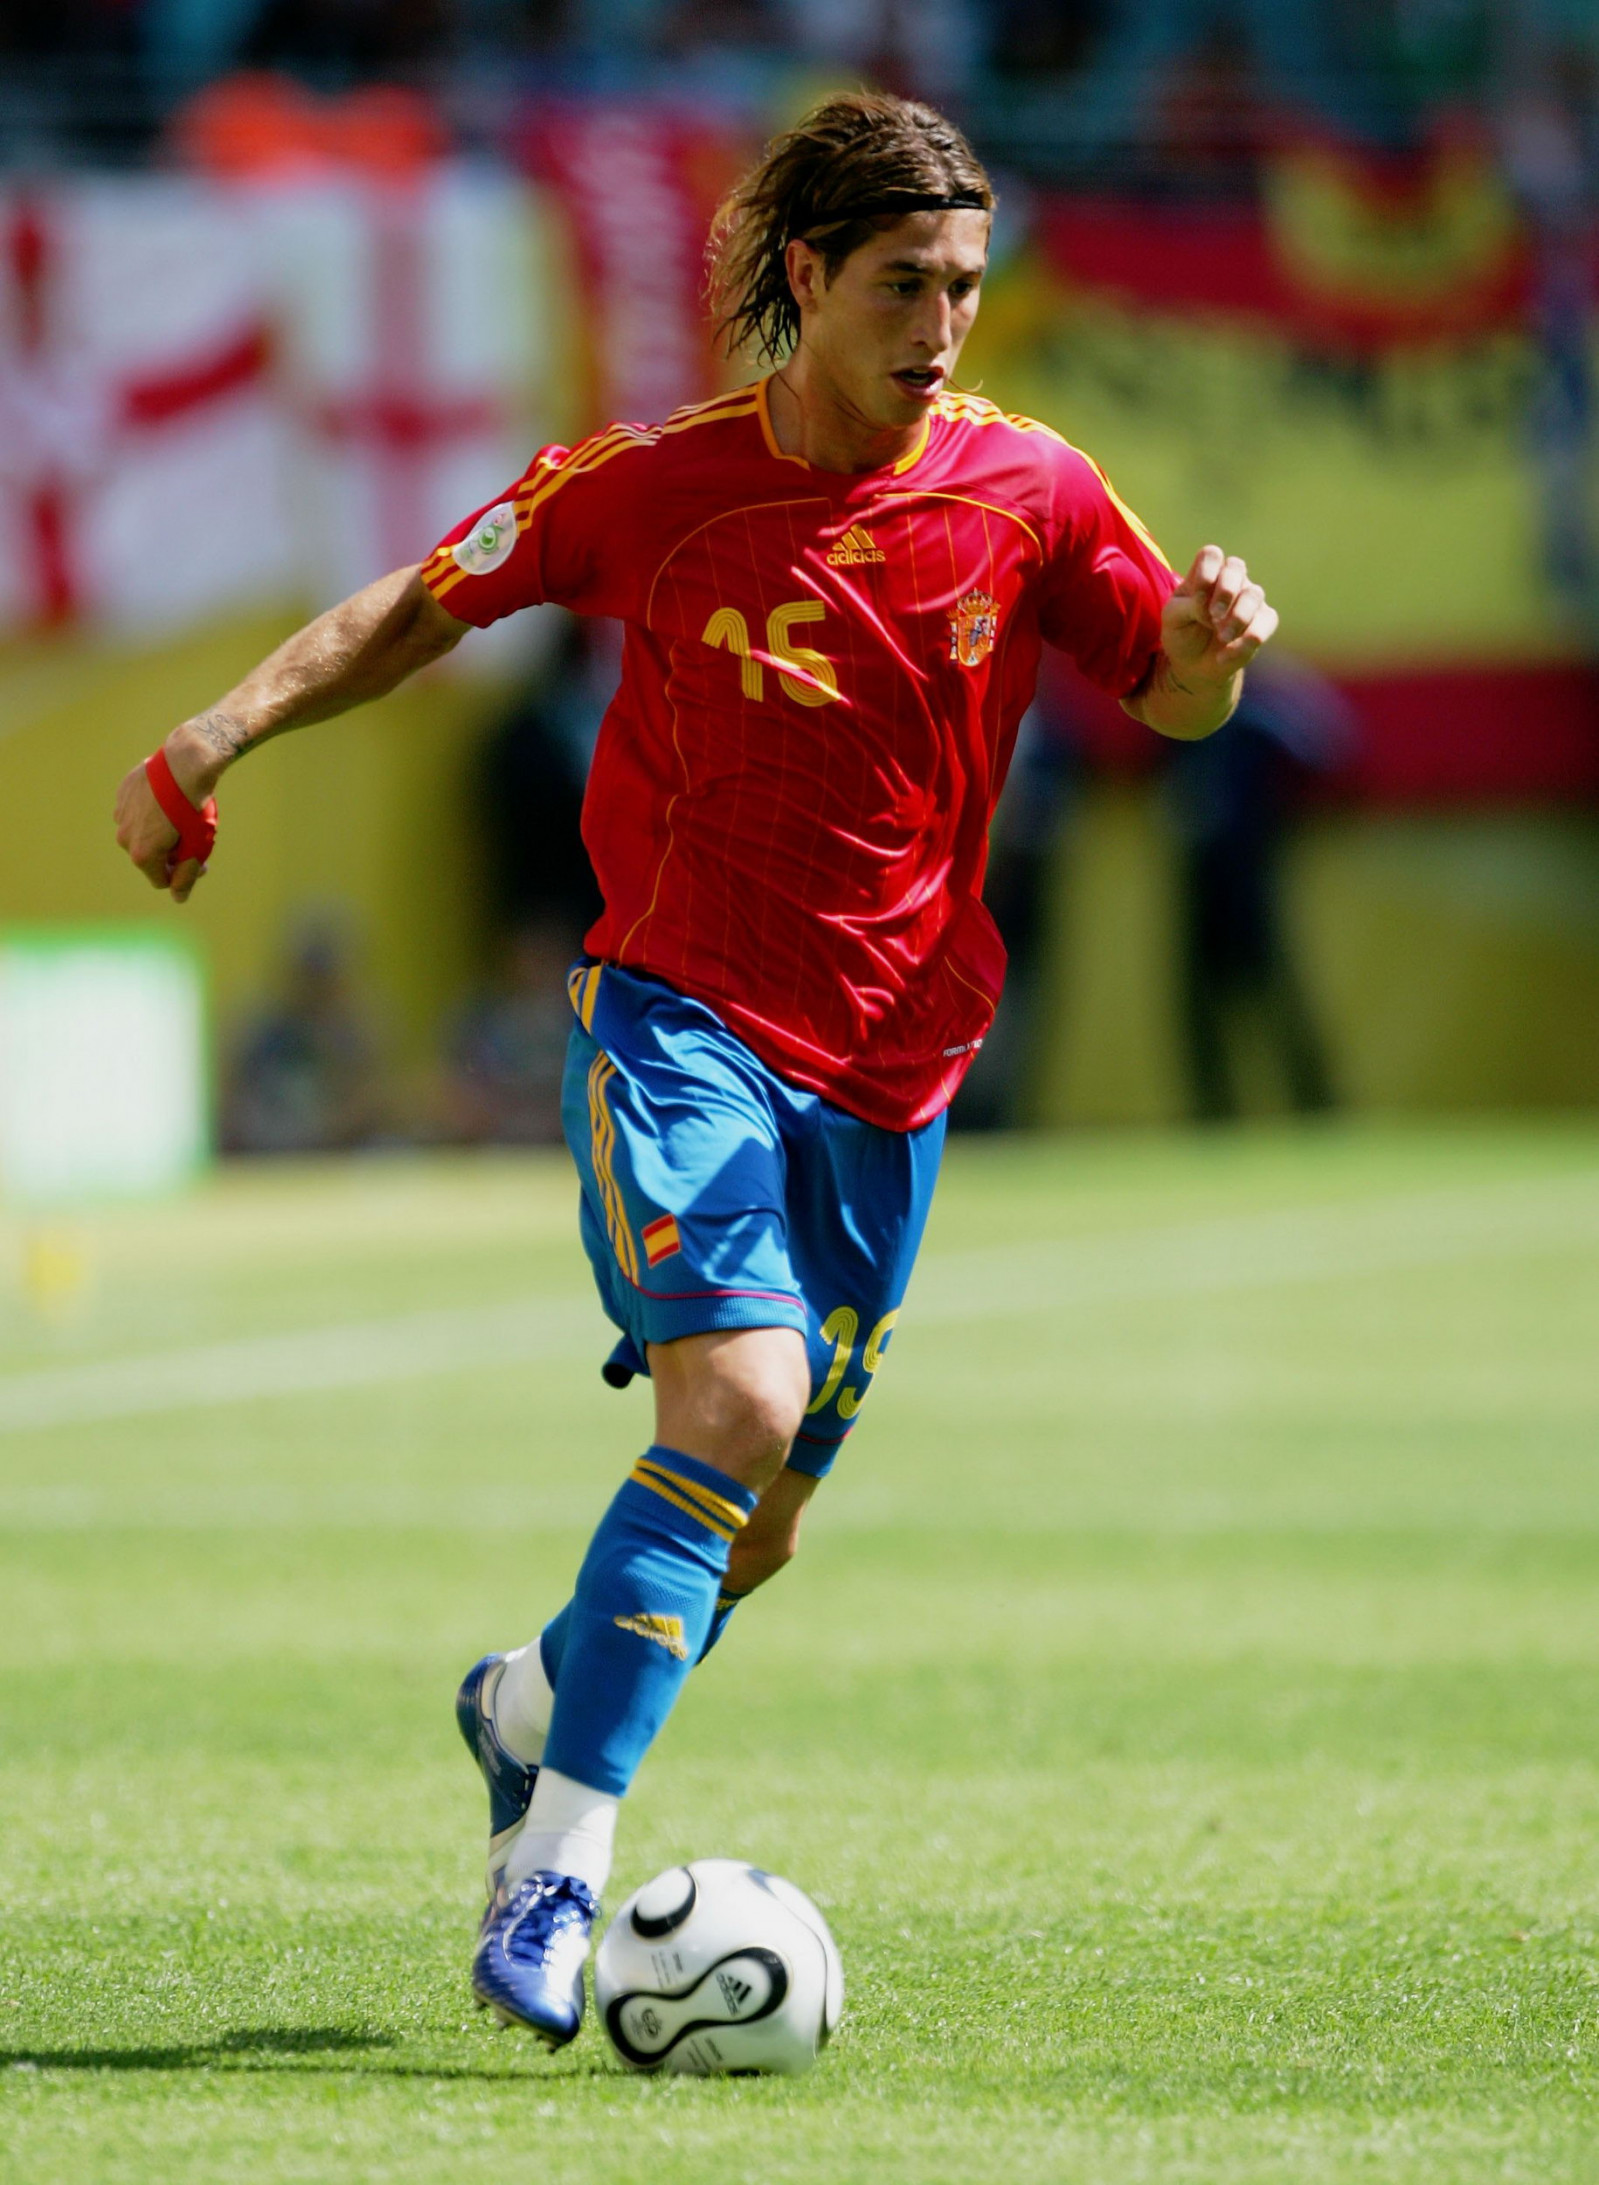 Серхио Рамос (Sergio Ramos)